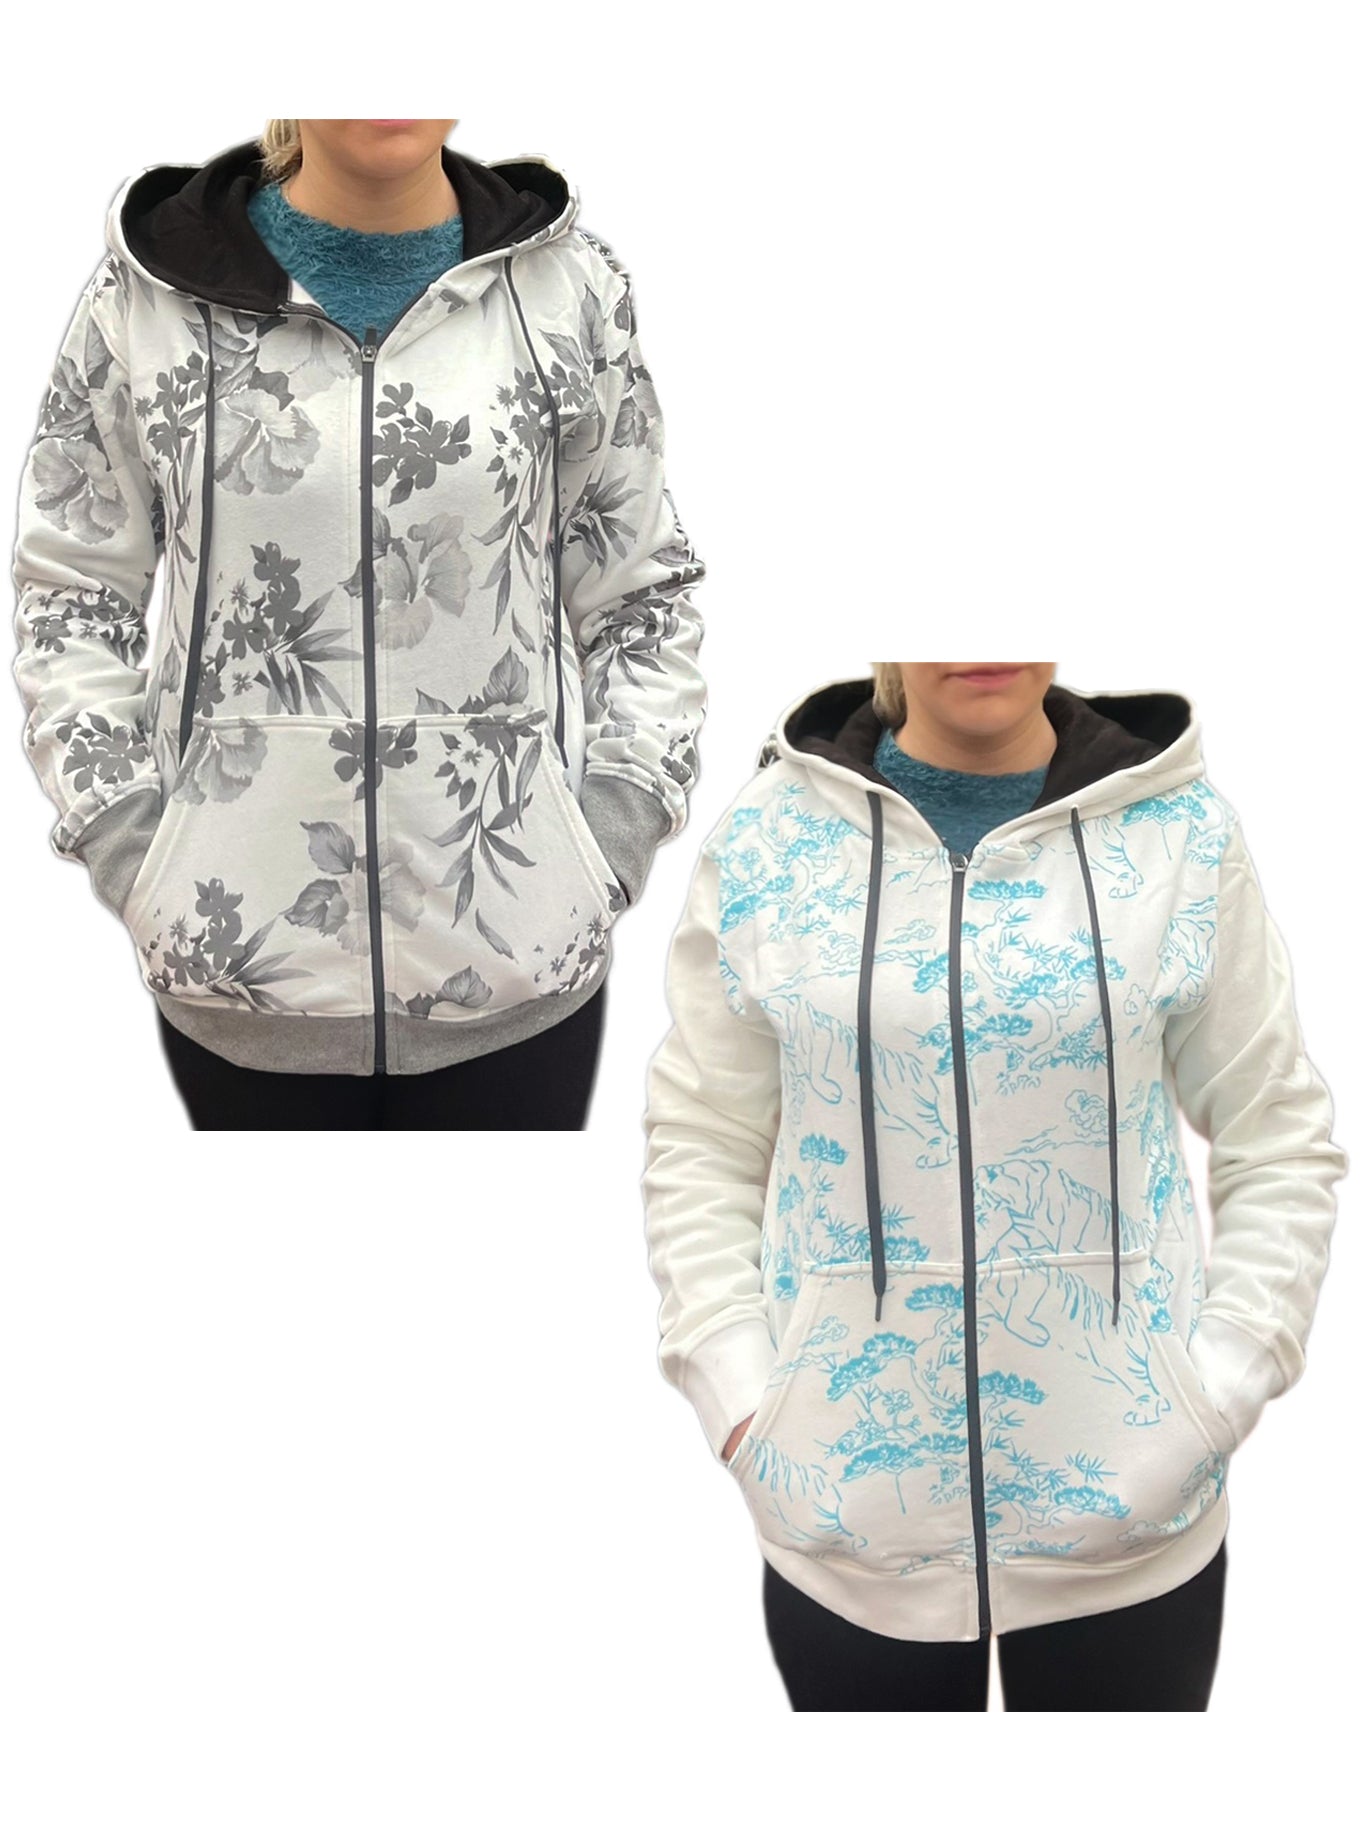 Bahob® 1 & 3 pack Womens Zipper Hoodie Long Sleeve Jacket Hoodies Top S-3XL Comfort Cotton winterwear. 